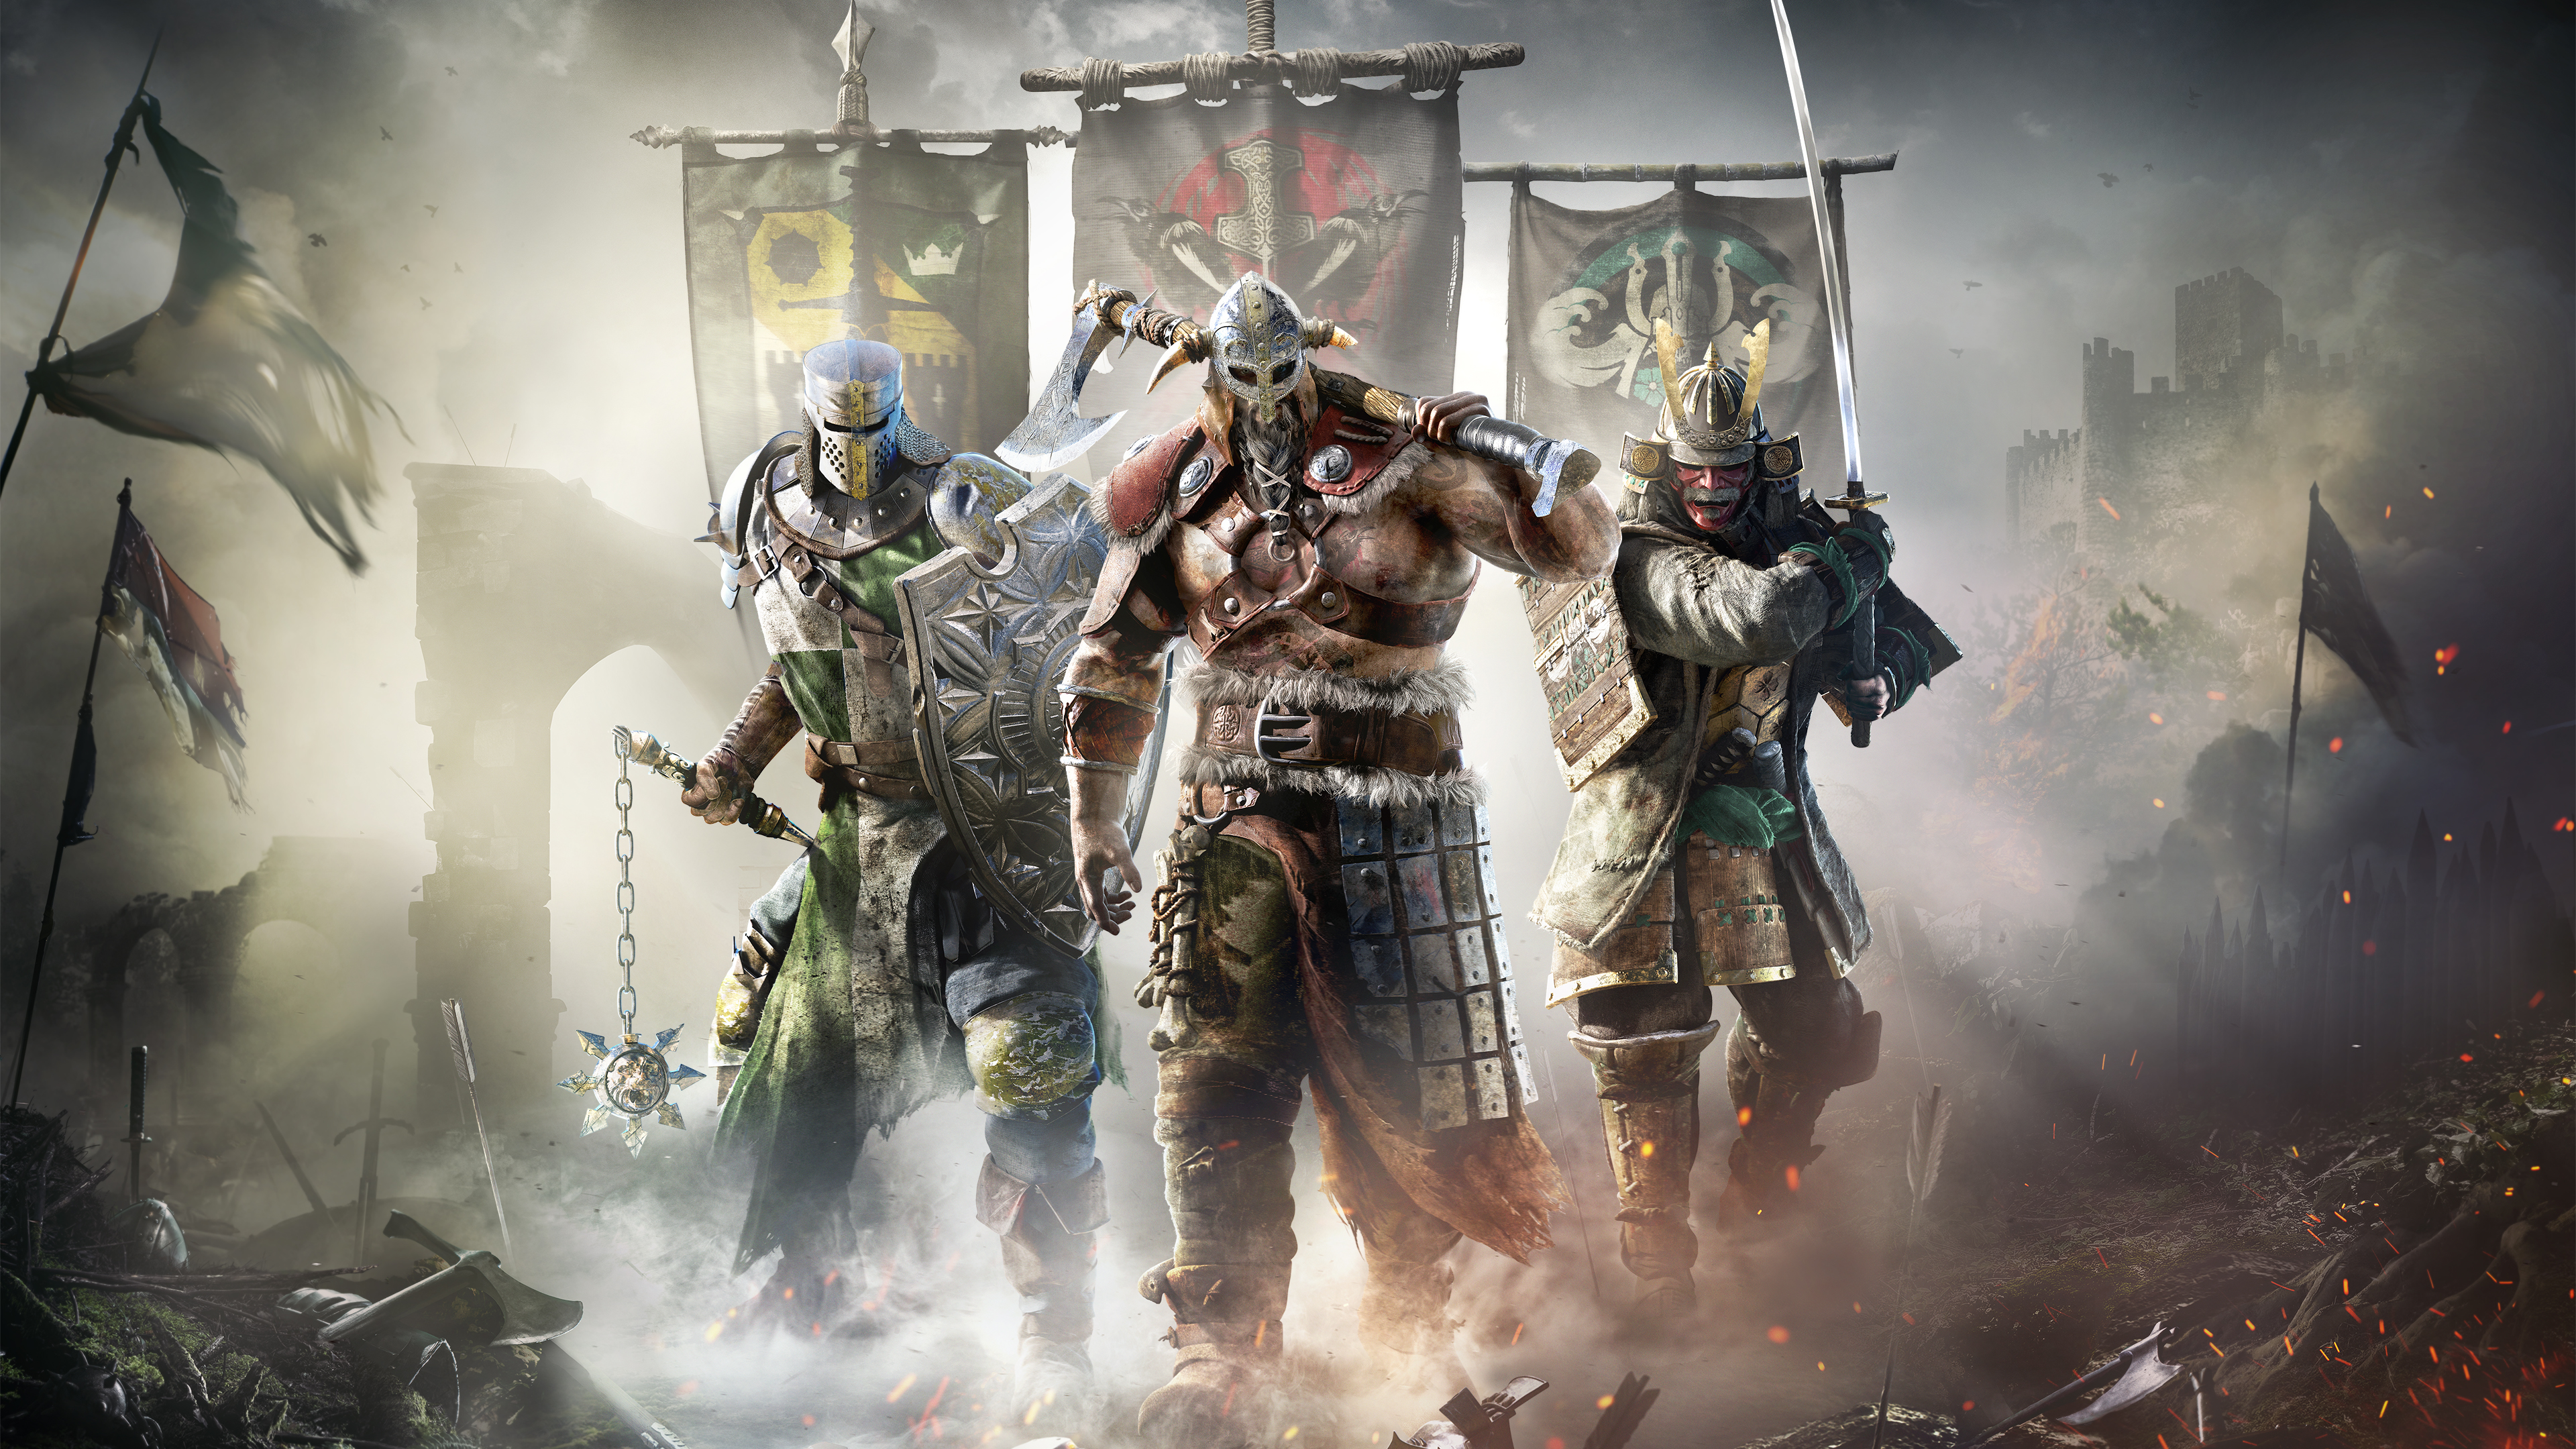 viking, video game, for honor, axe, banner, for honor (video game), katana, knight, samurai, warrior